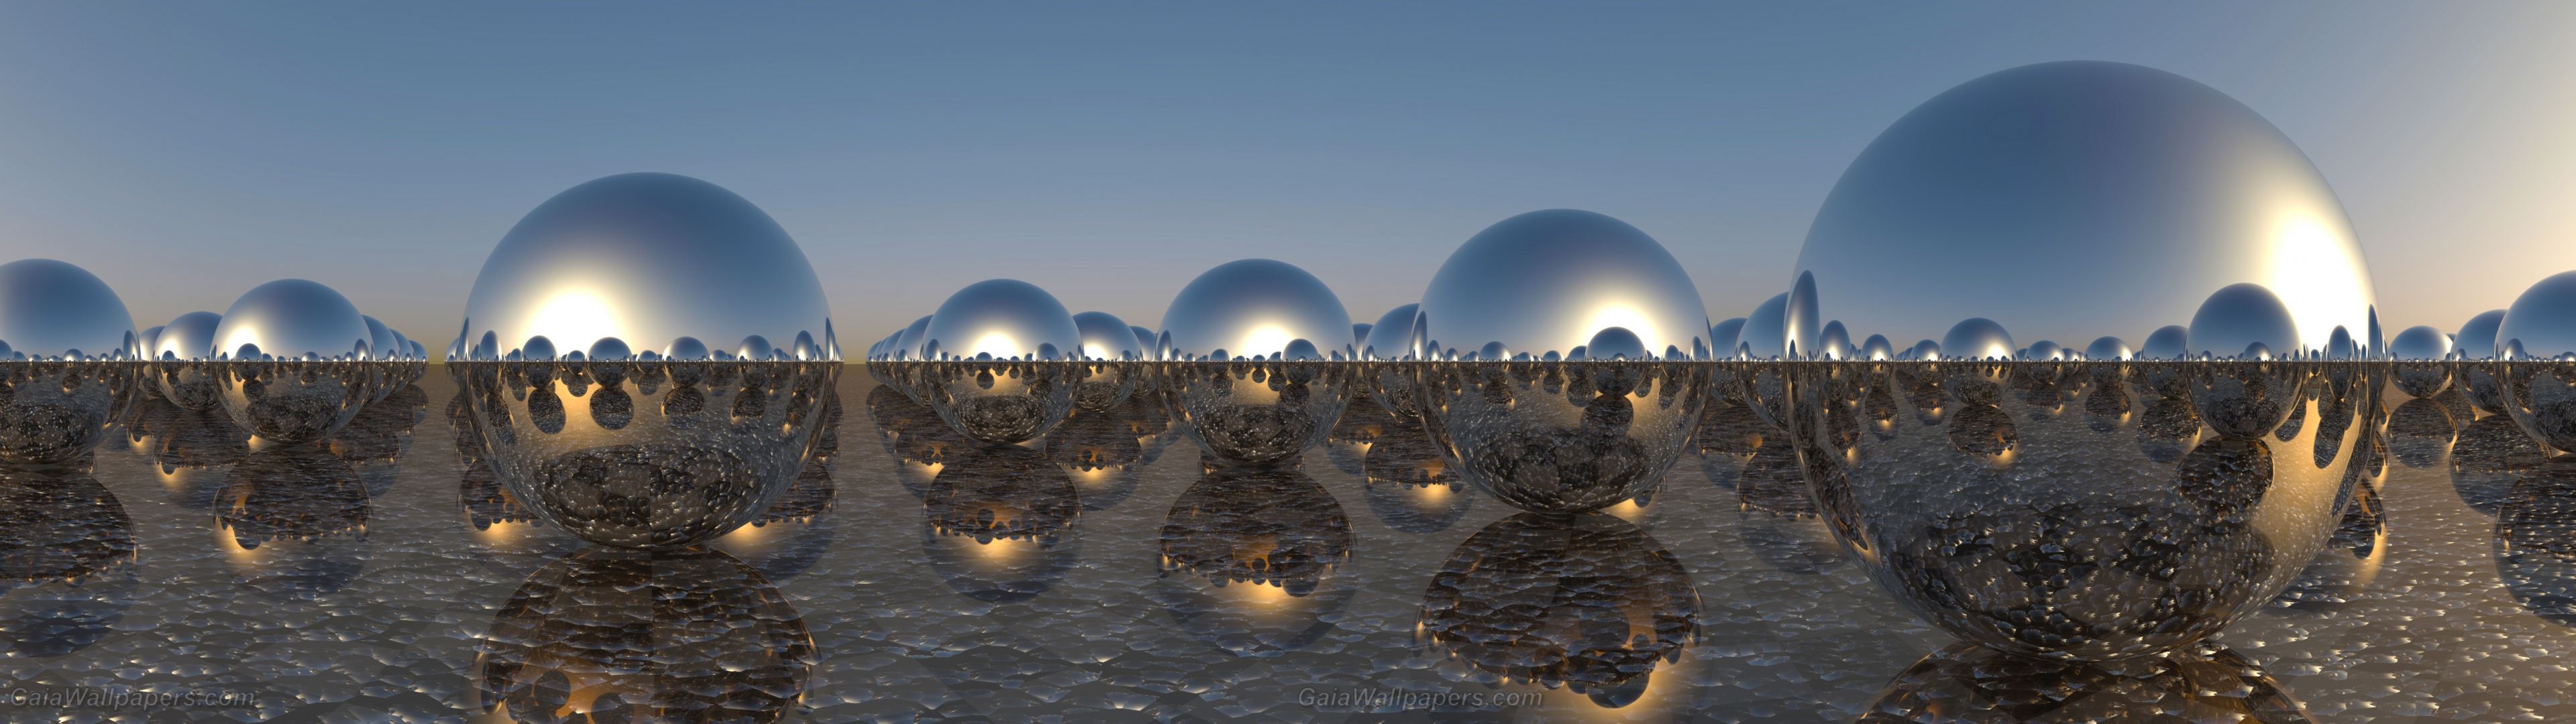 Sunrise in a world of chrome spheres - Free desktop wallpapers